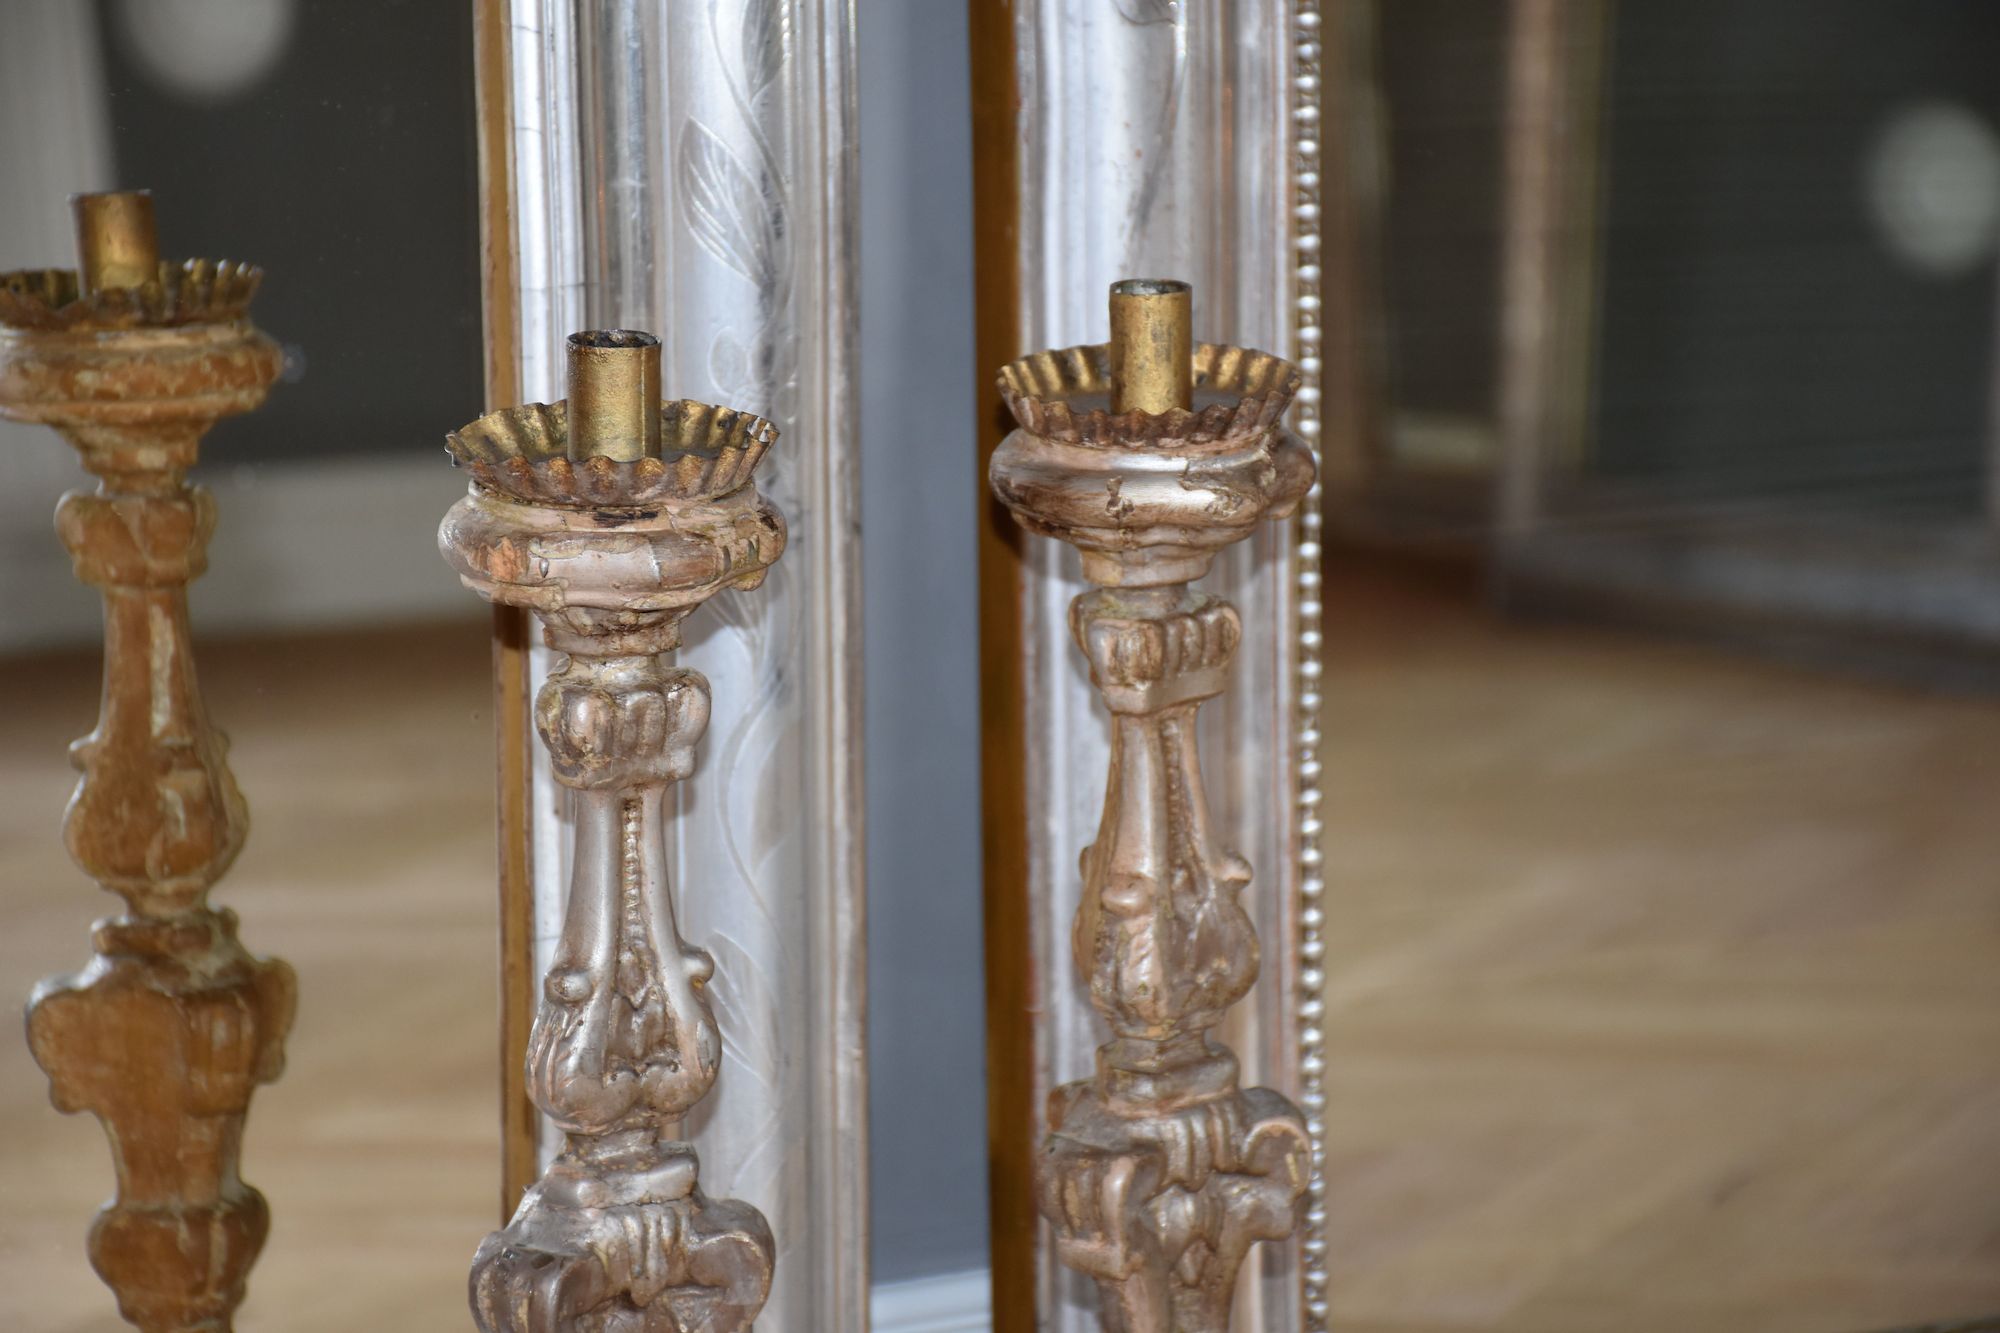 A pair of 19th century Italian candlesticks/pricket sticks